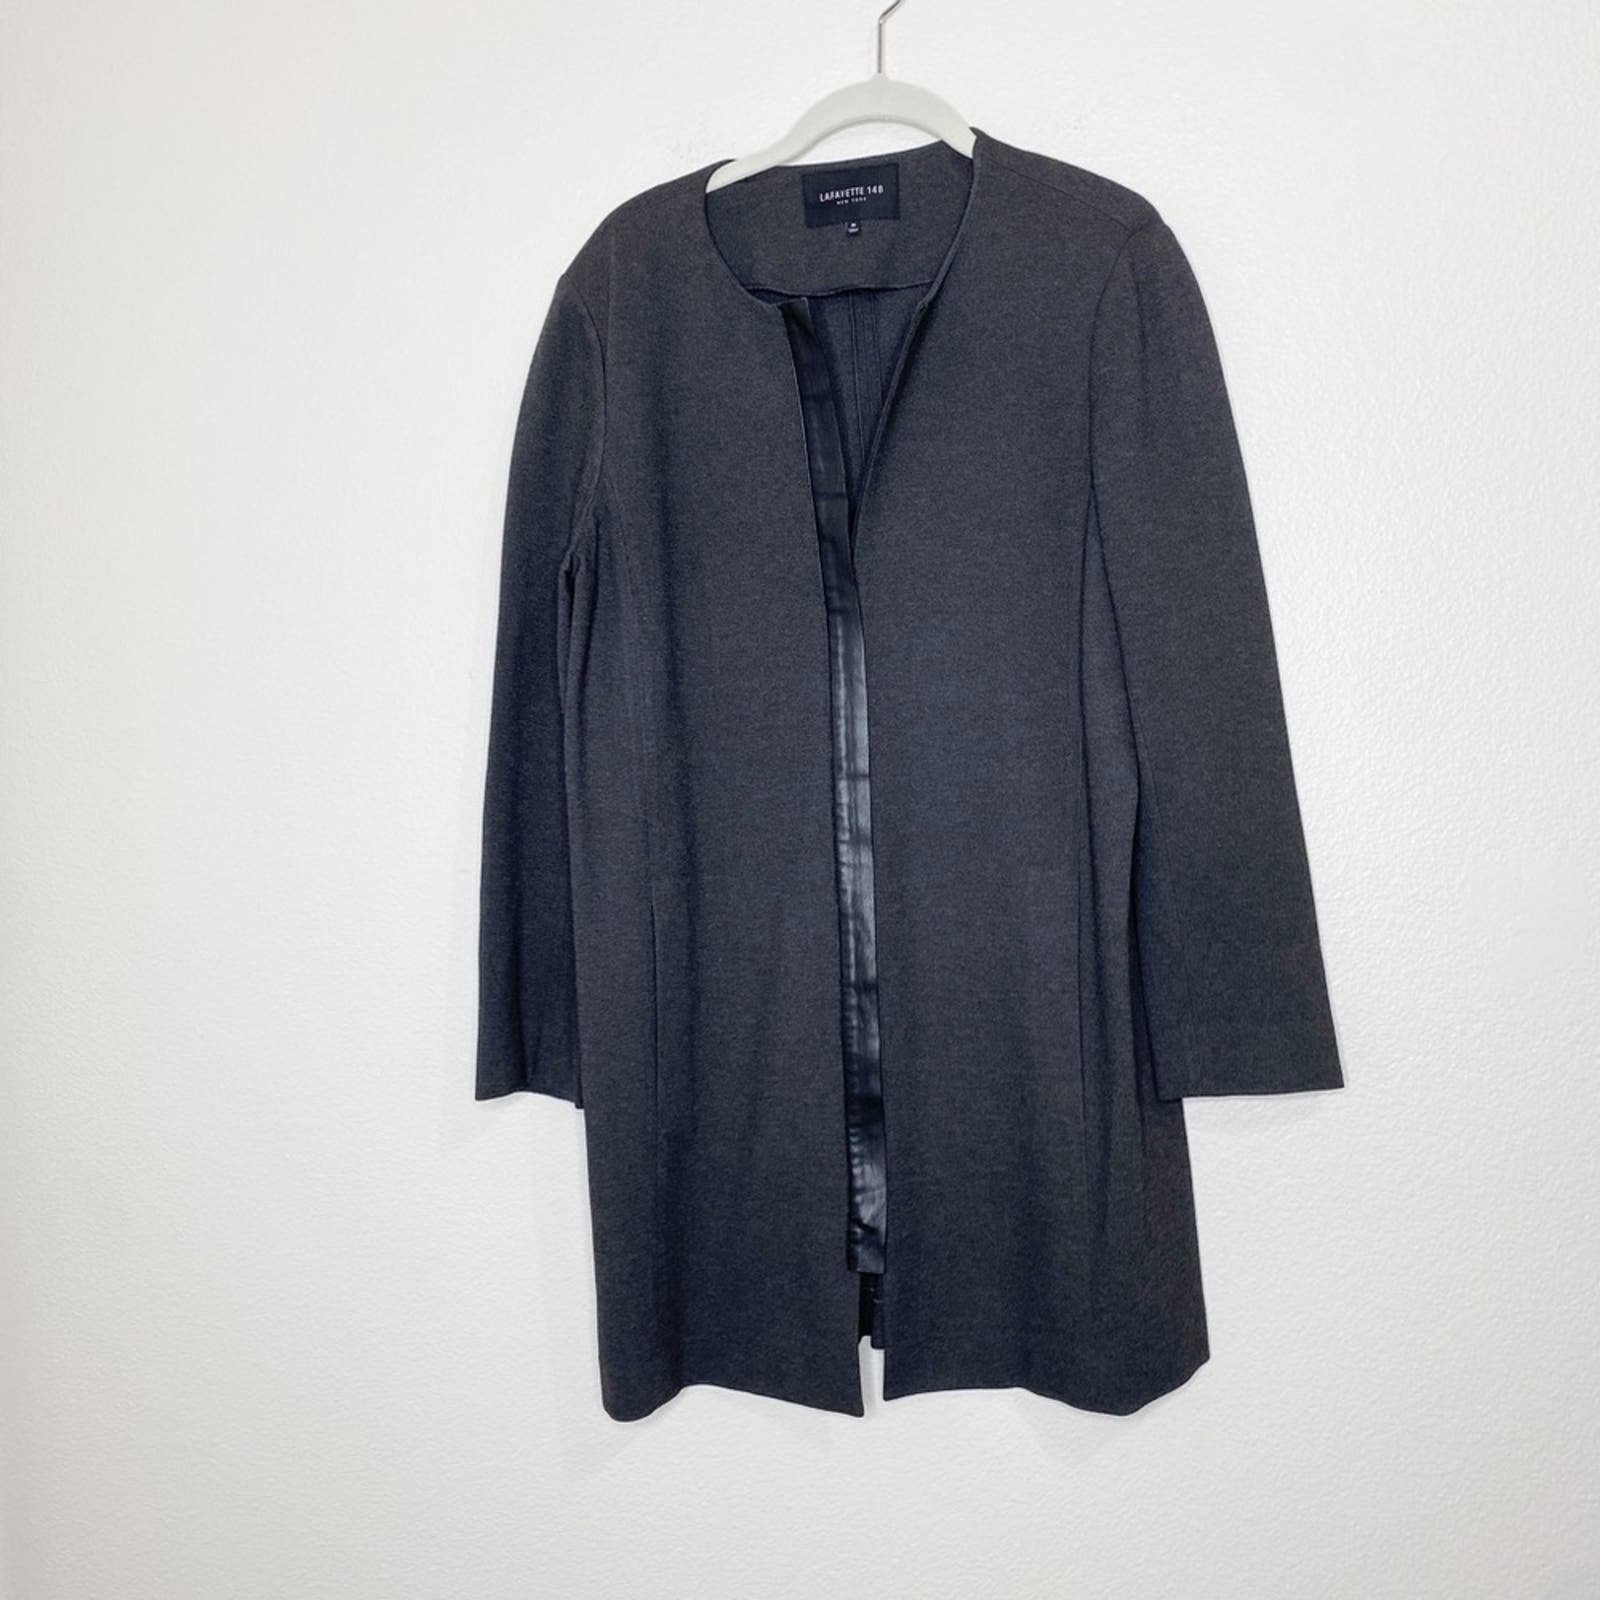 where to buy  Lafayette 148 dark grey black trimmed long line jacket size medium joE4B5pnu US Outlet